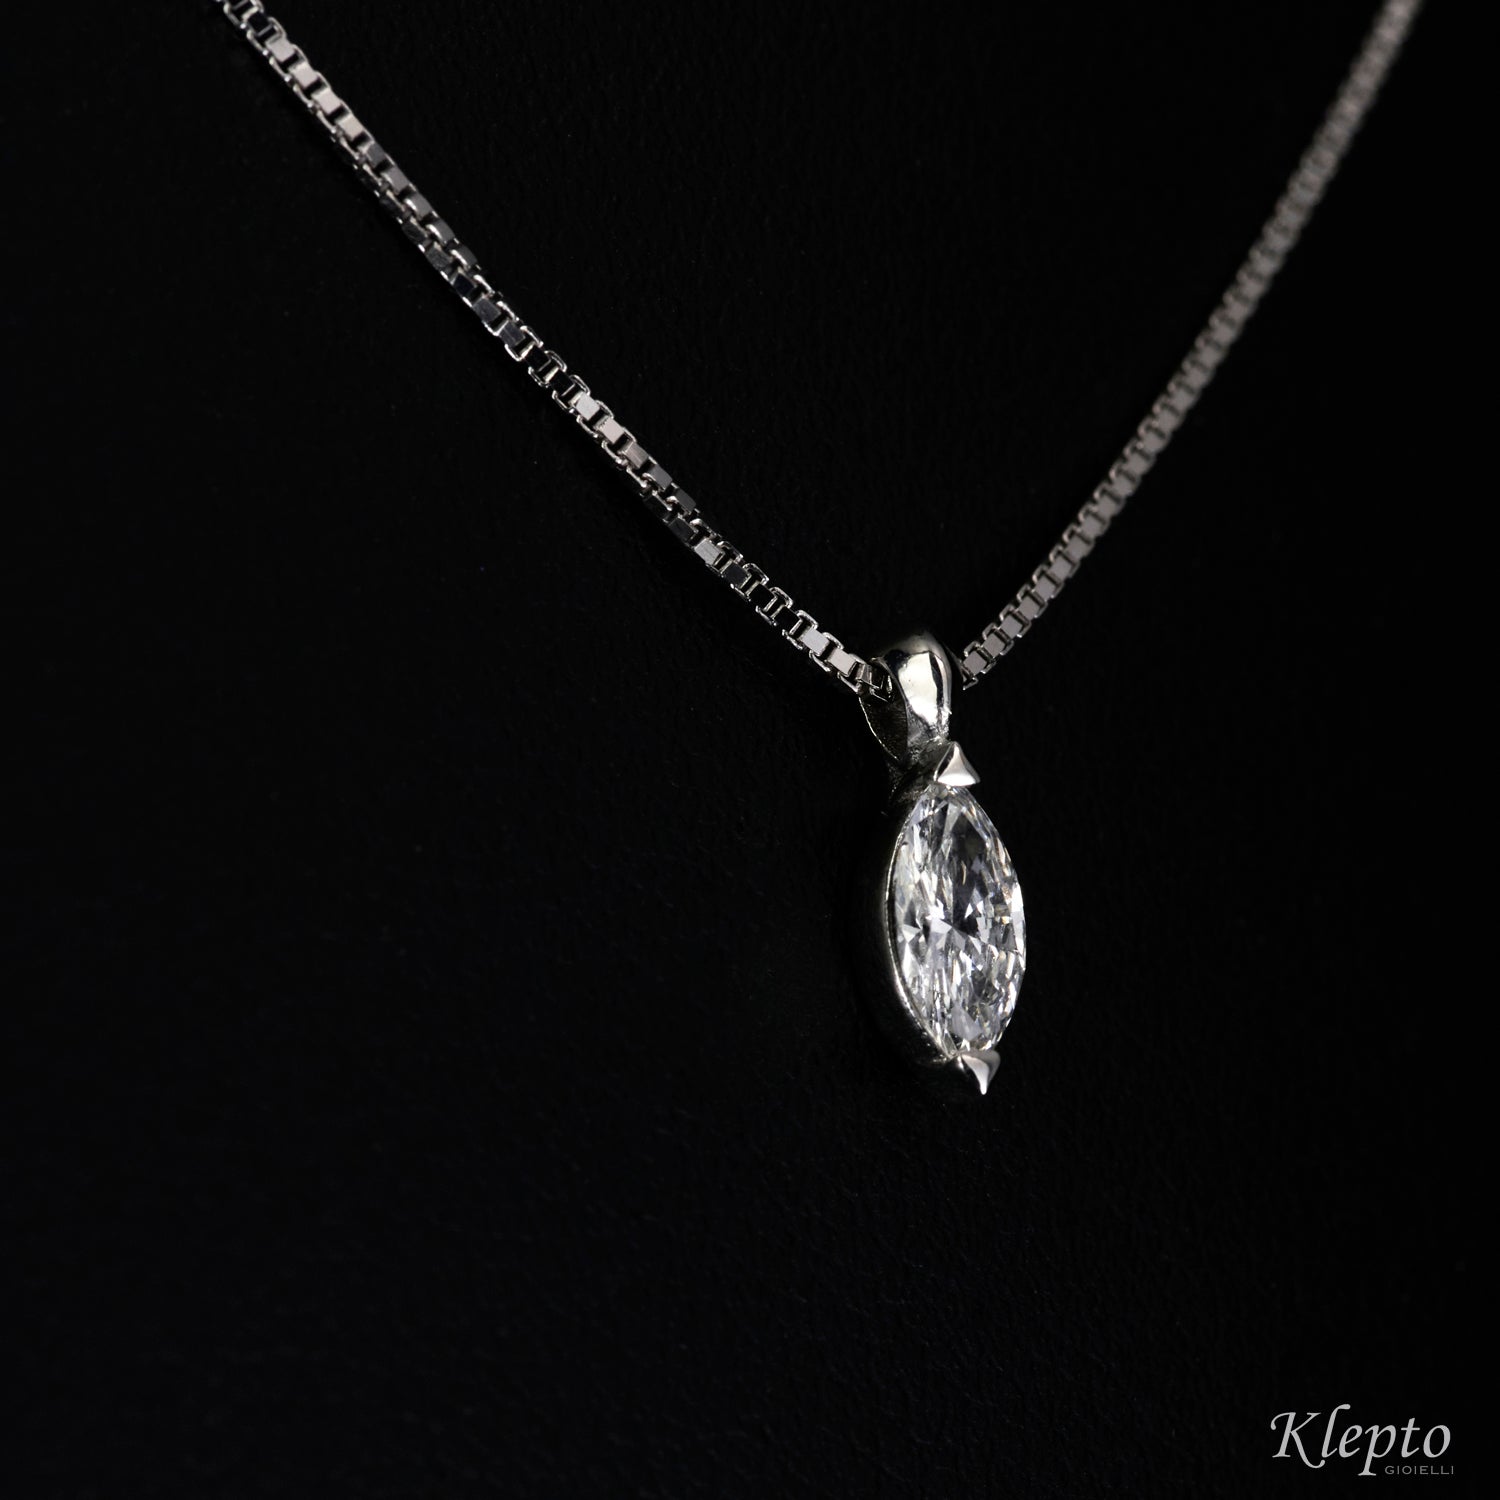 White gold pendant with Navette cut diamond